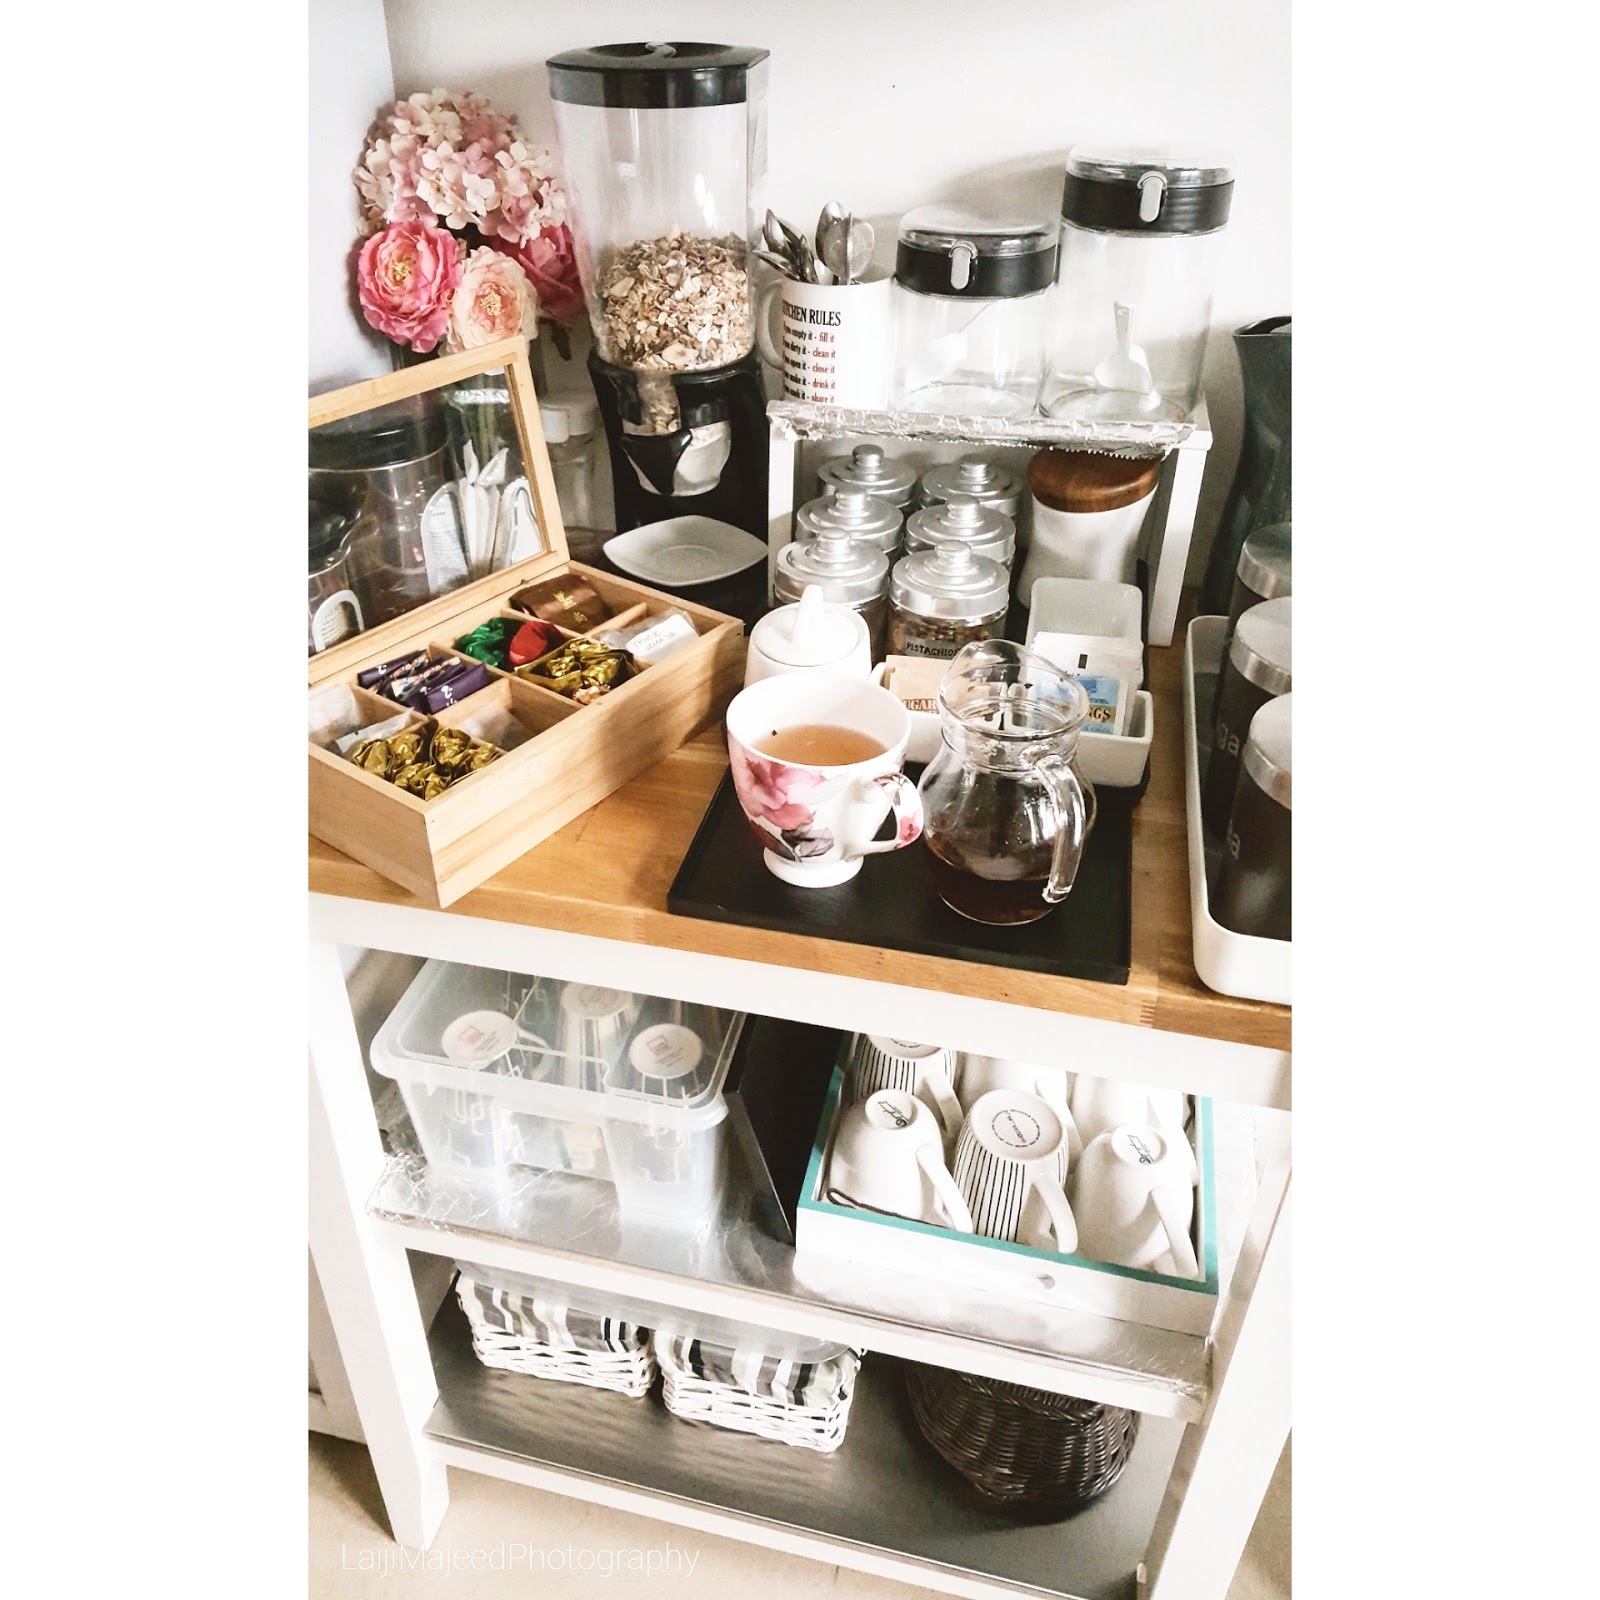 Laiji's Creative Corner: Tea / Coffee and Breakfast Station